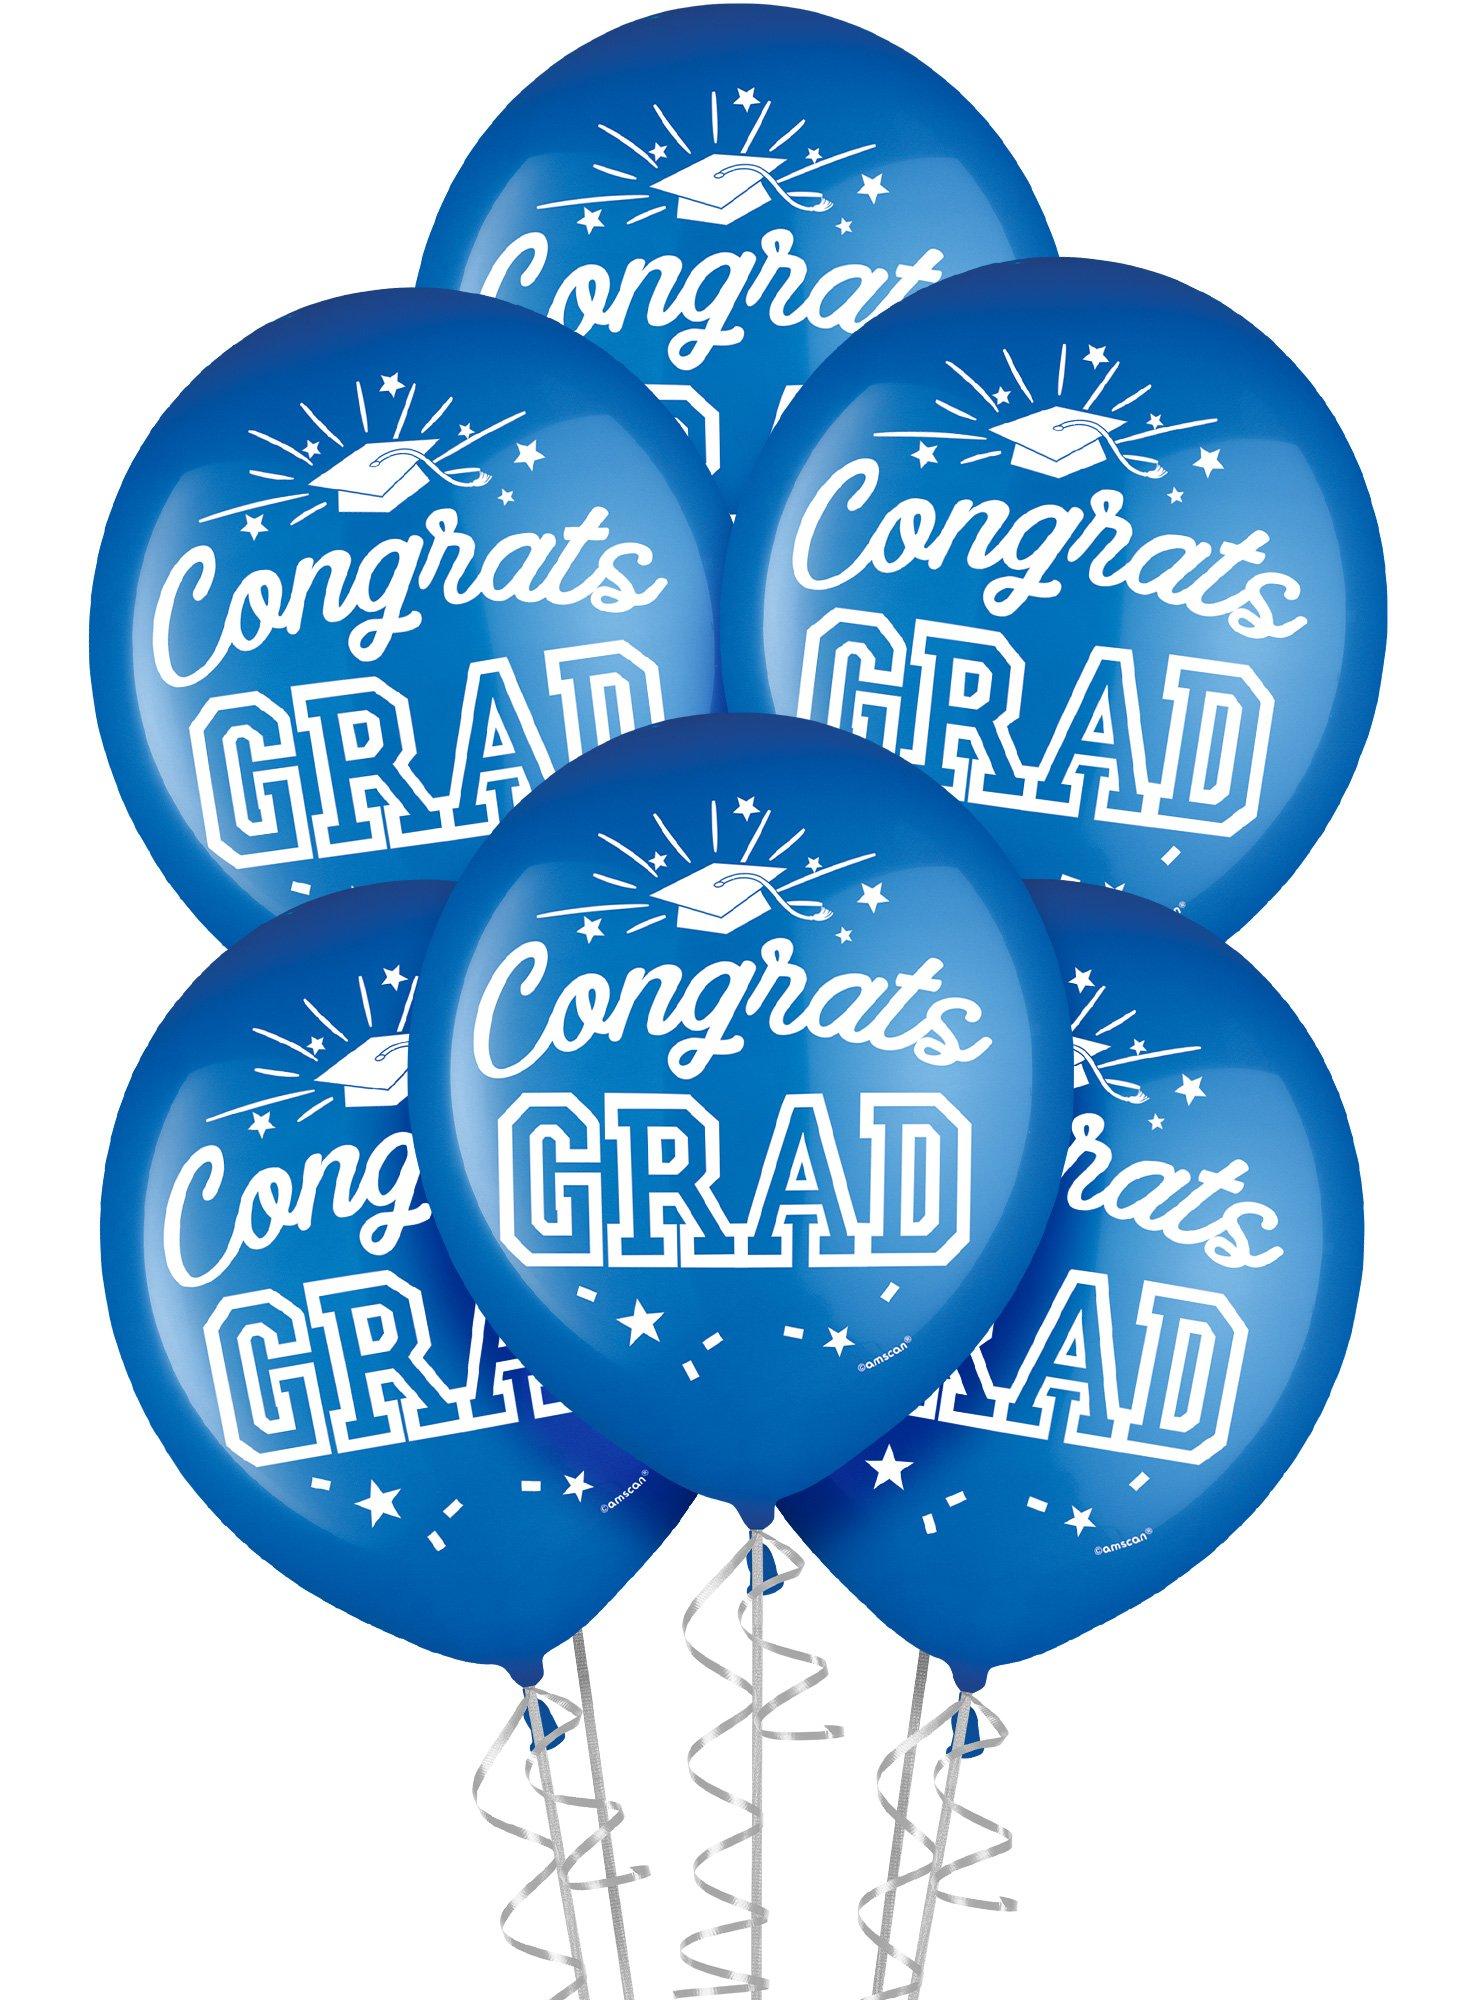 15ct, 12in, Blue Congrats Grad Latex Balloons